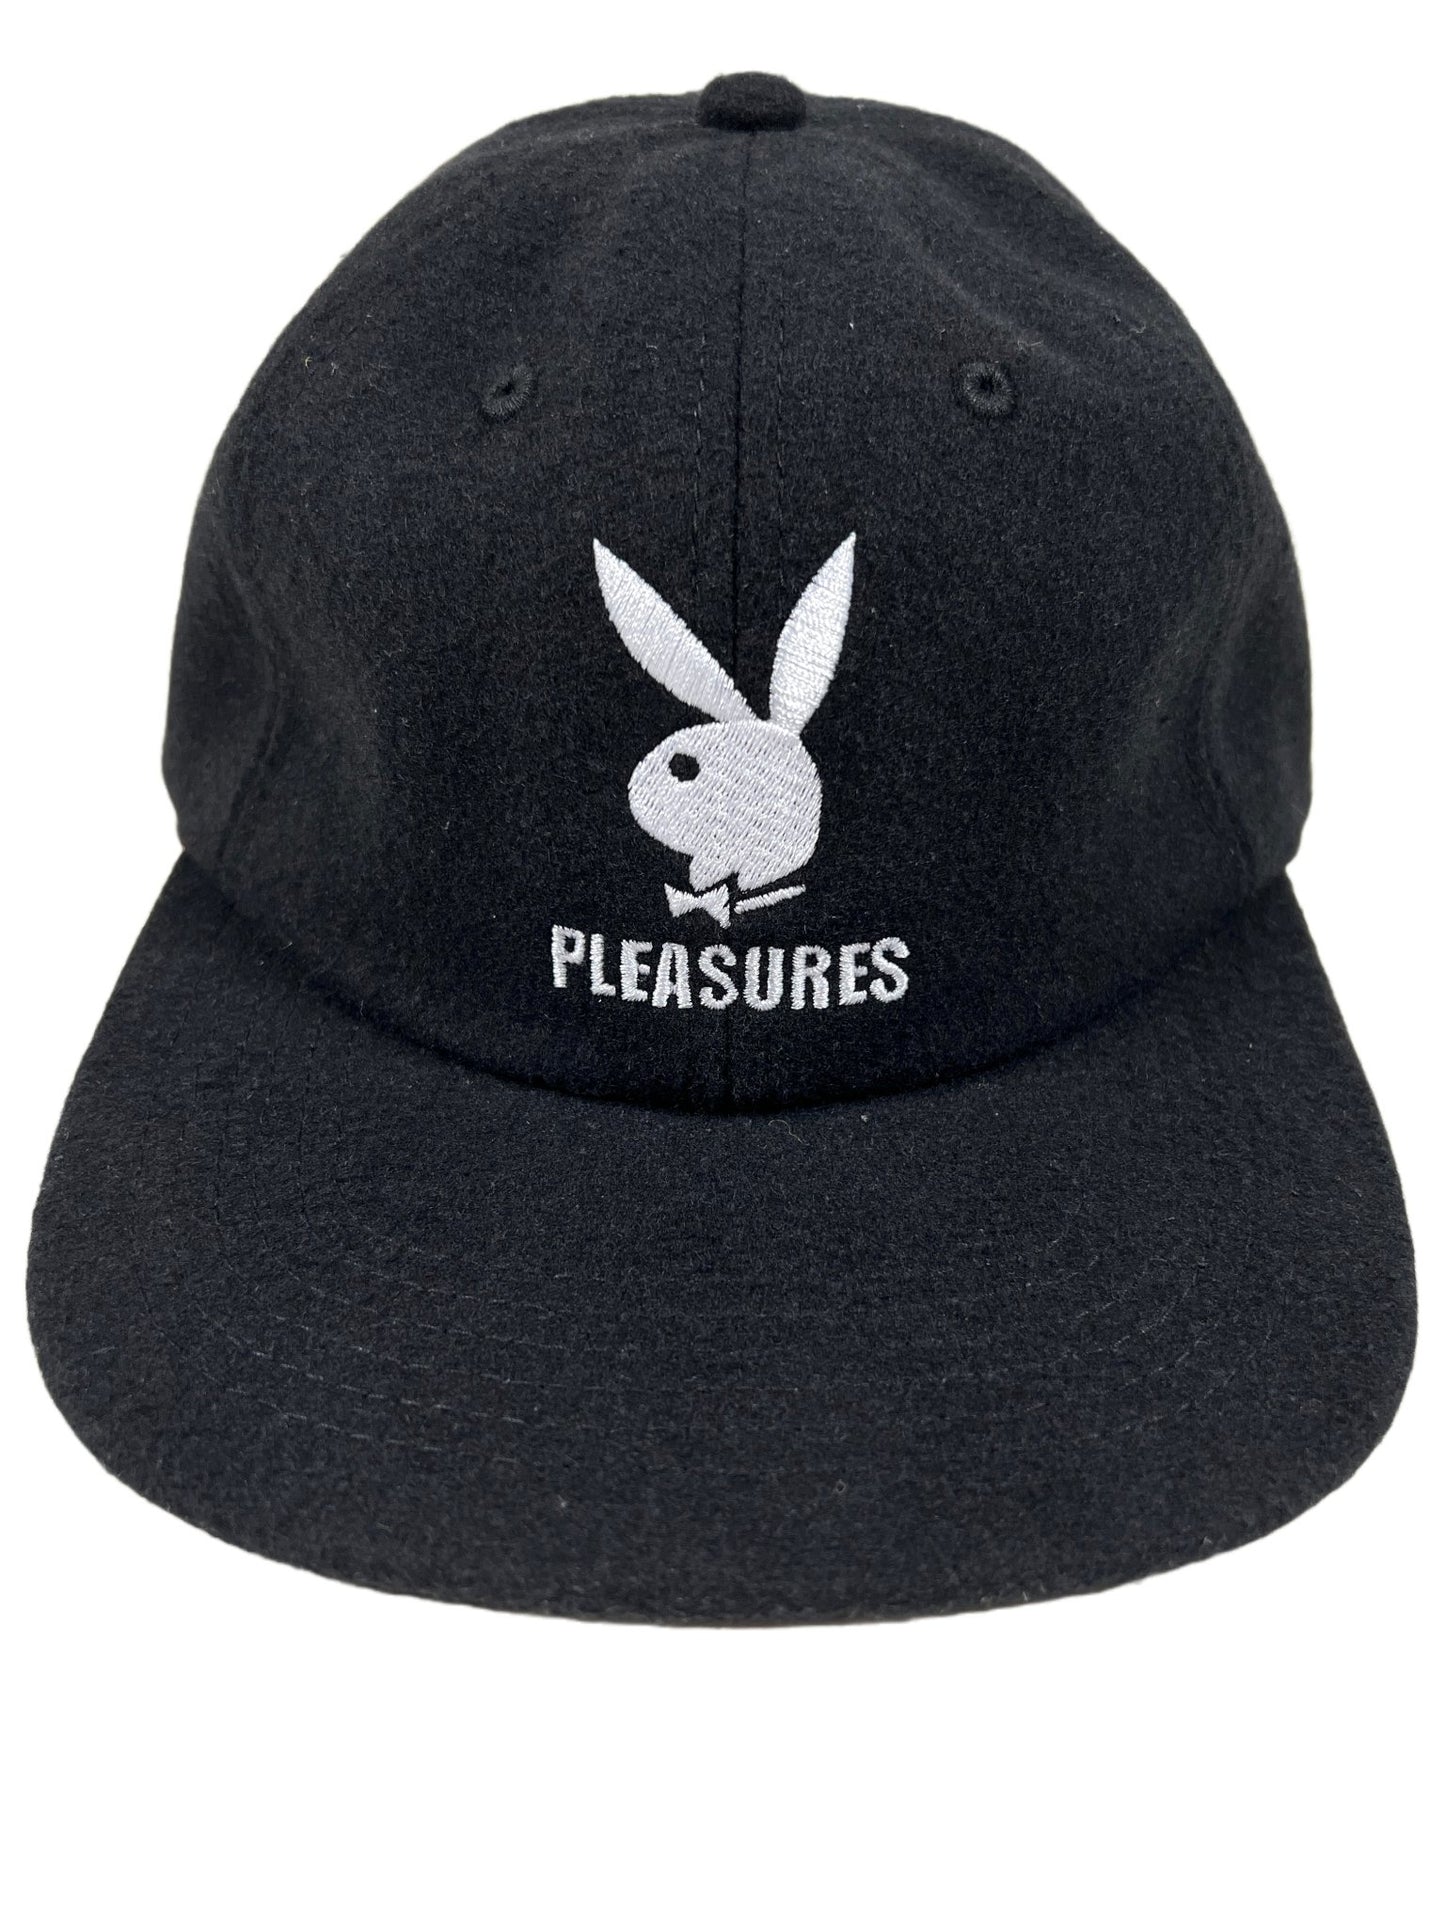 A black wool hat with the word PLEASURES on it. 
Product Name: PLEASURES PB WOOL STRAPBACK HAT BLACK 
Brand Name: PLEASURES